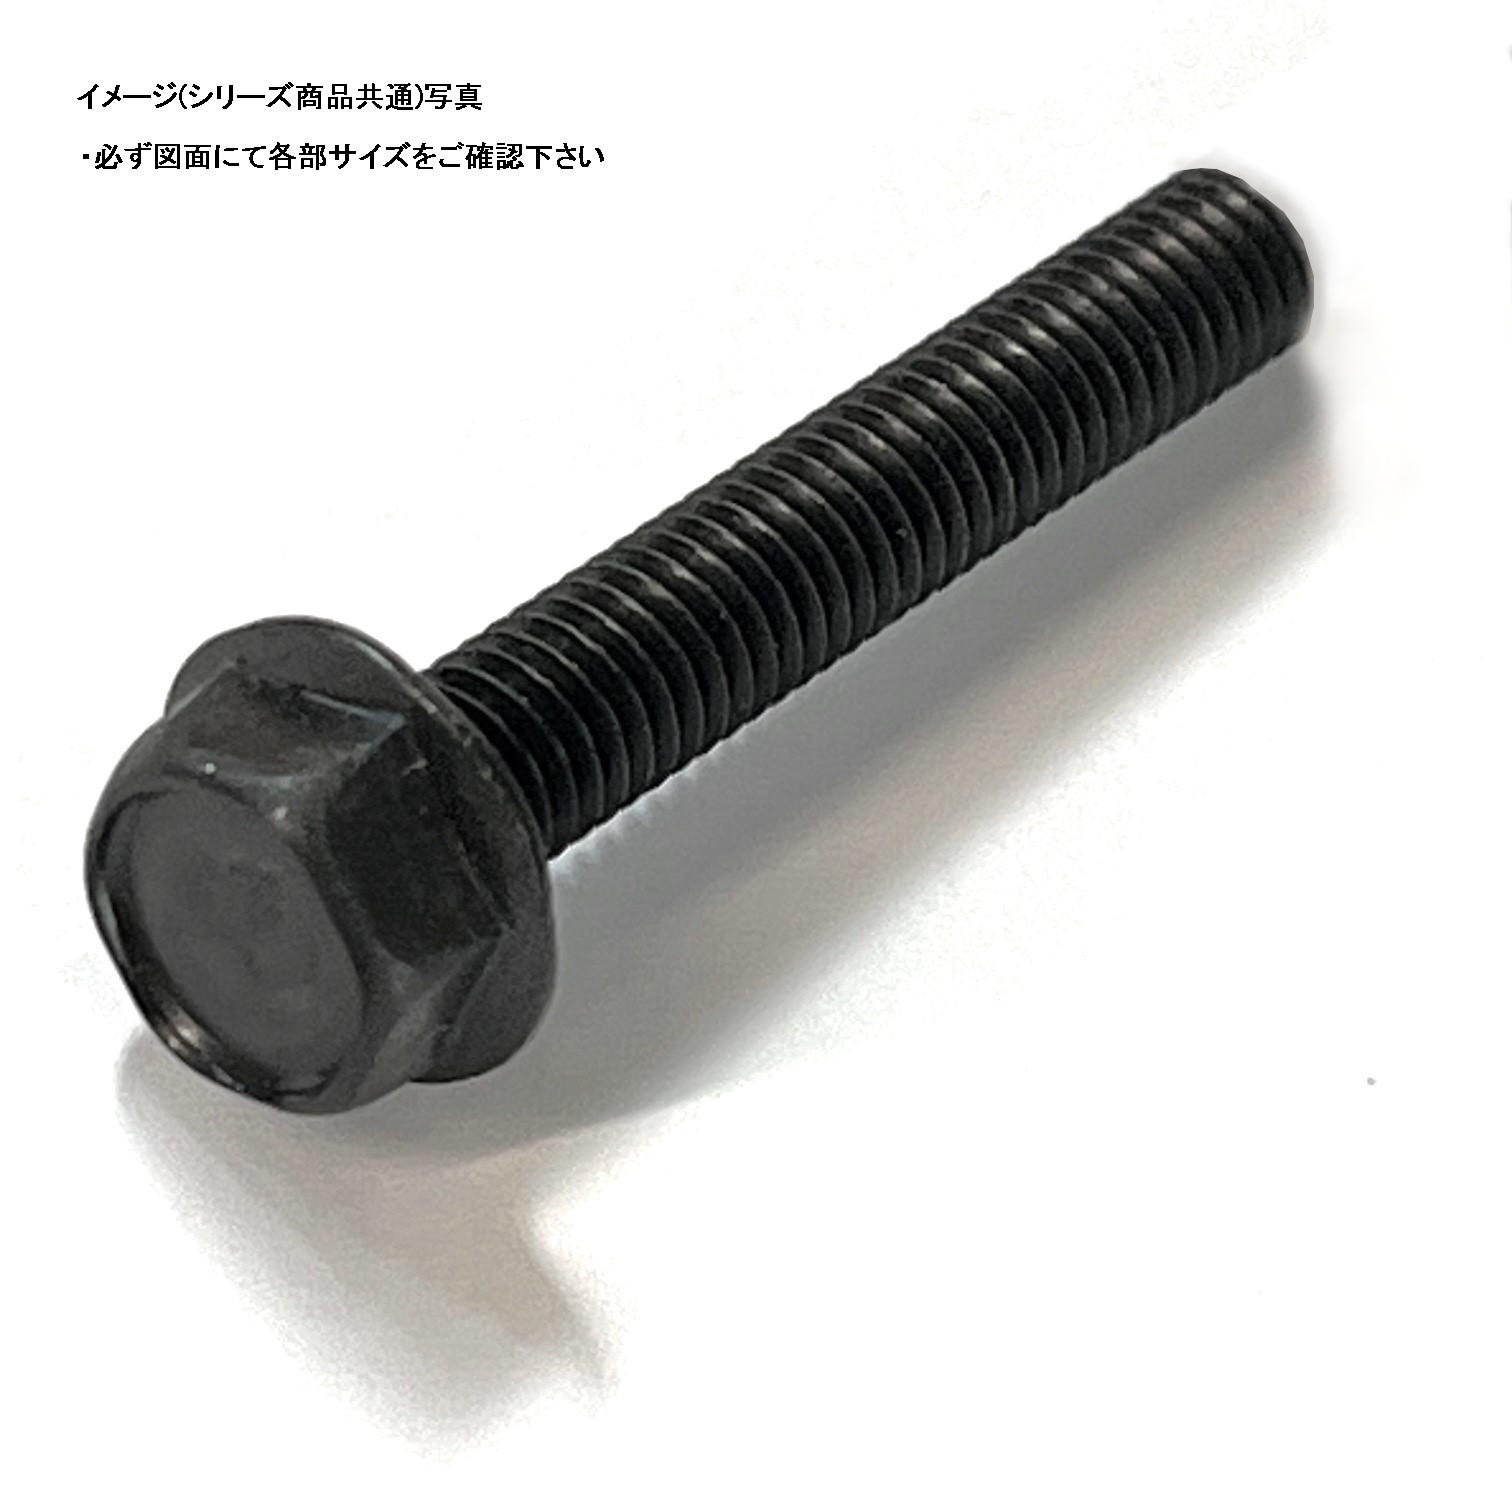 M8X30L black stainless steel flange bolt 